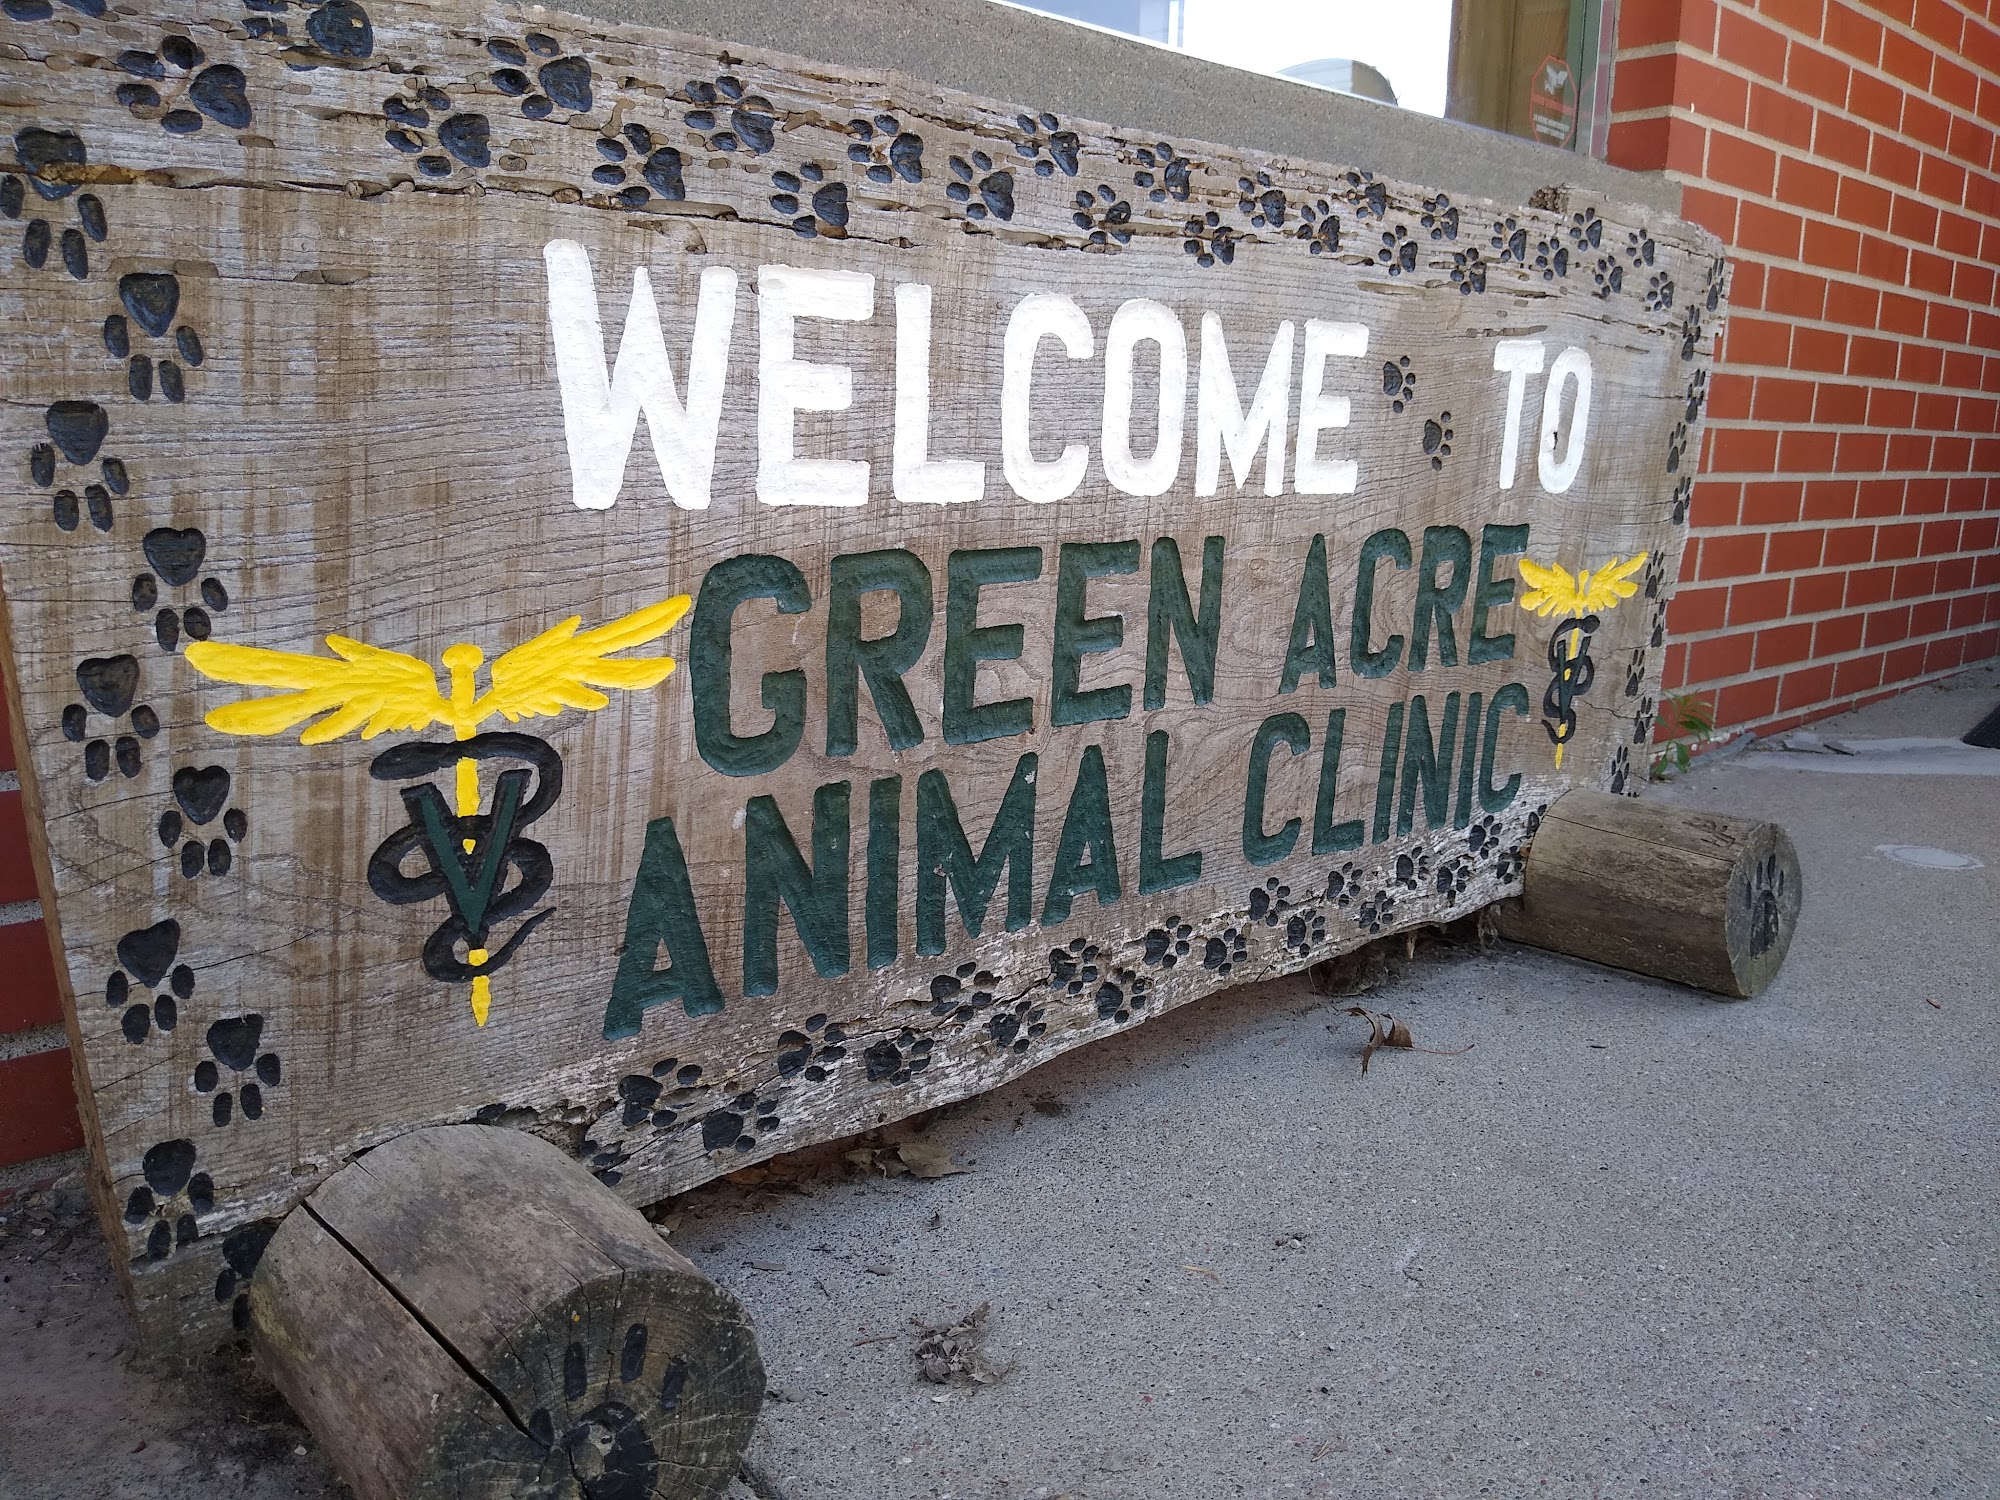 Green Acre Animal Clinic 1276 County Rd 17, Wahoo Nebraska 68066